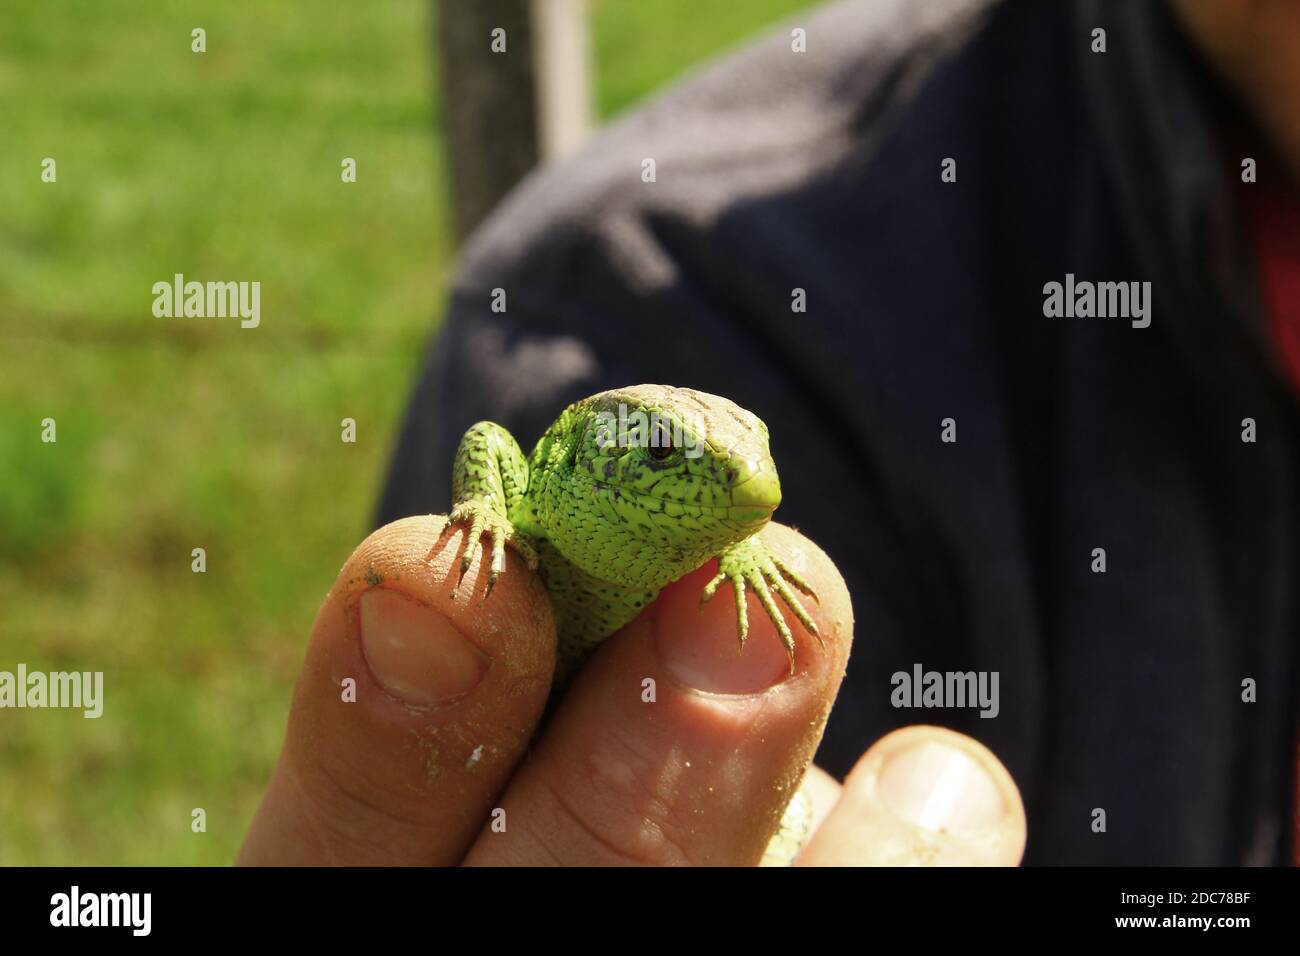 A lizard in a man's hand Stock Photo